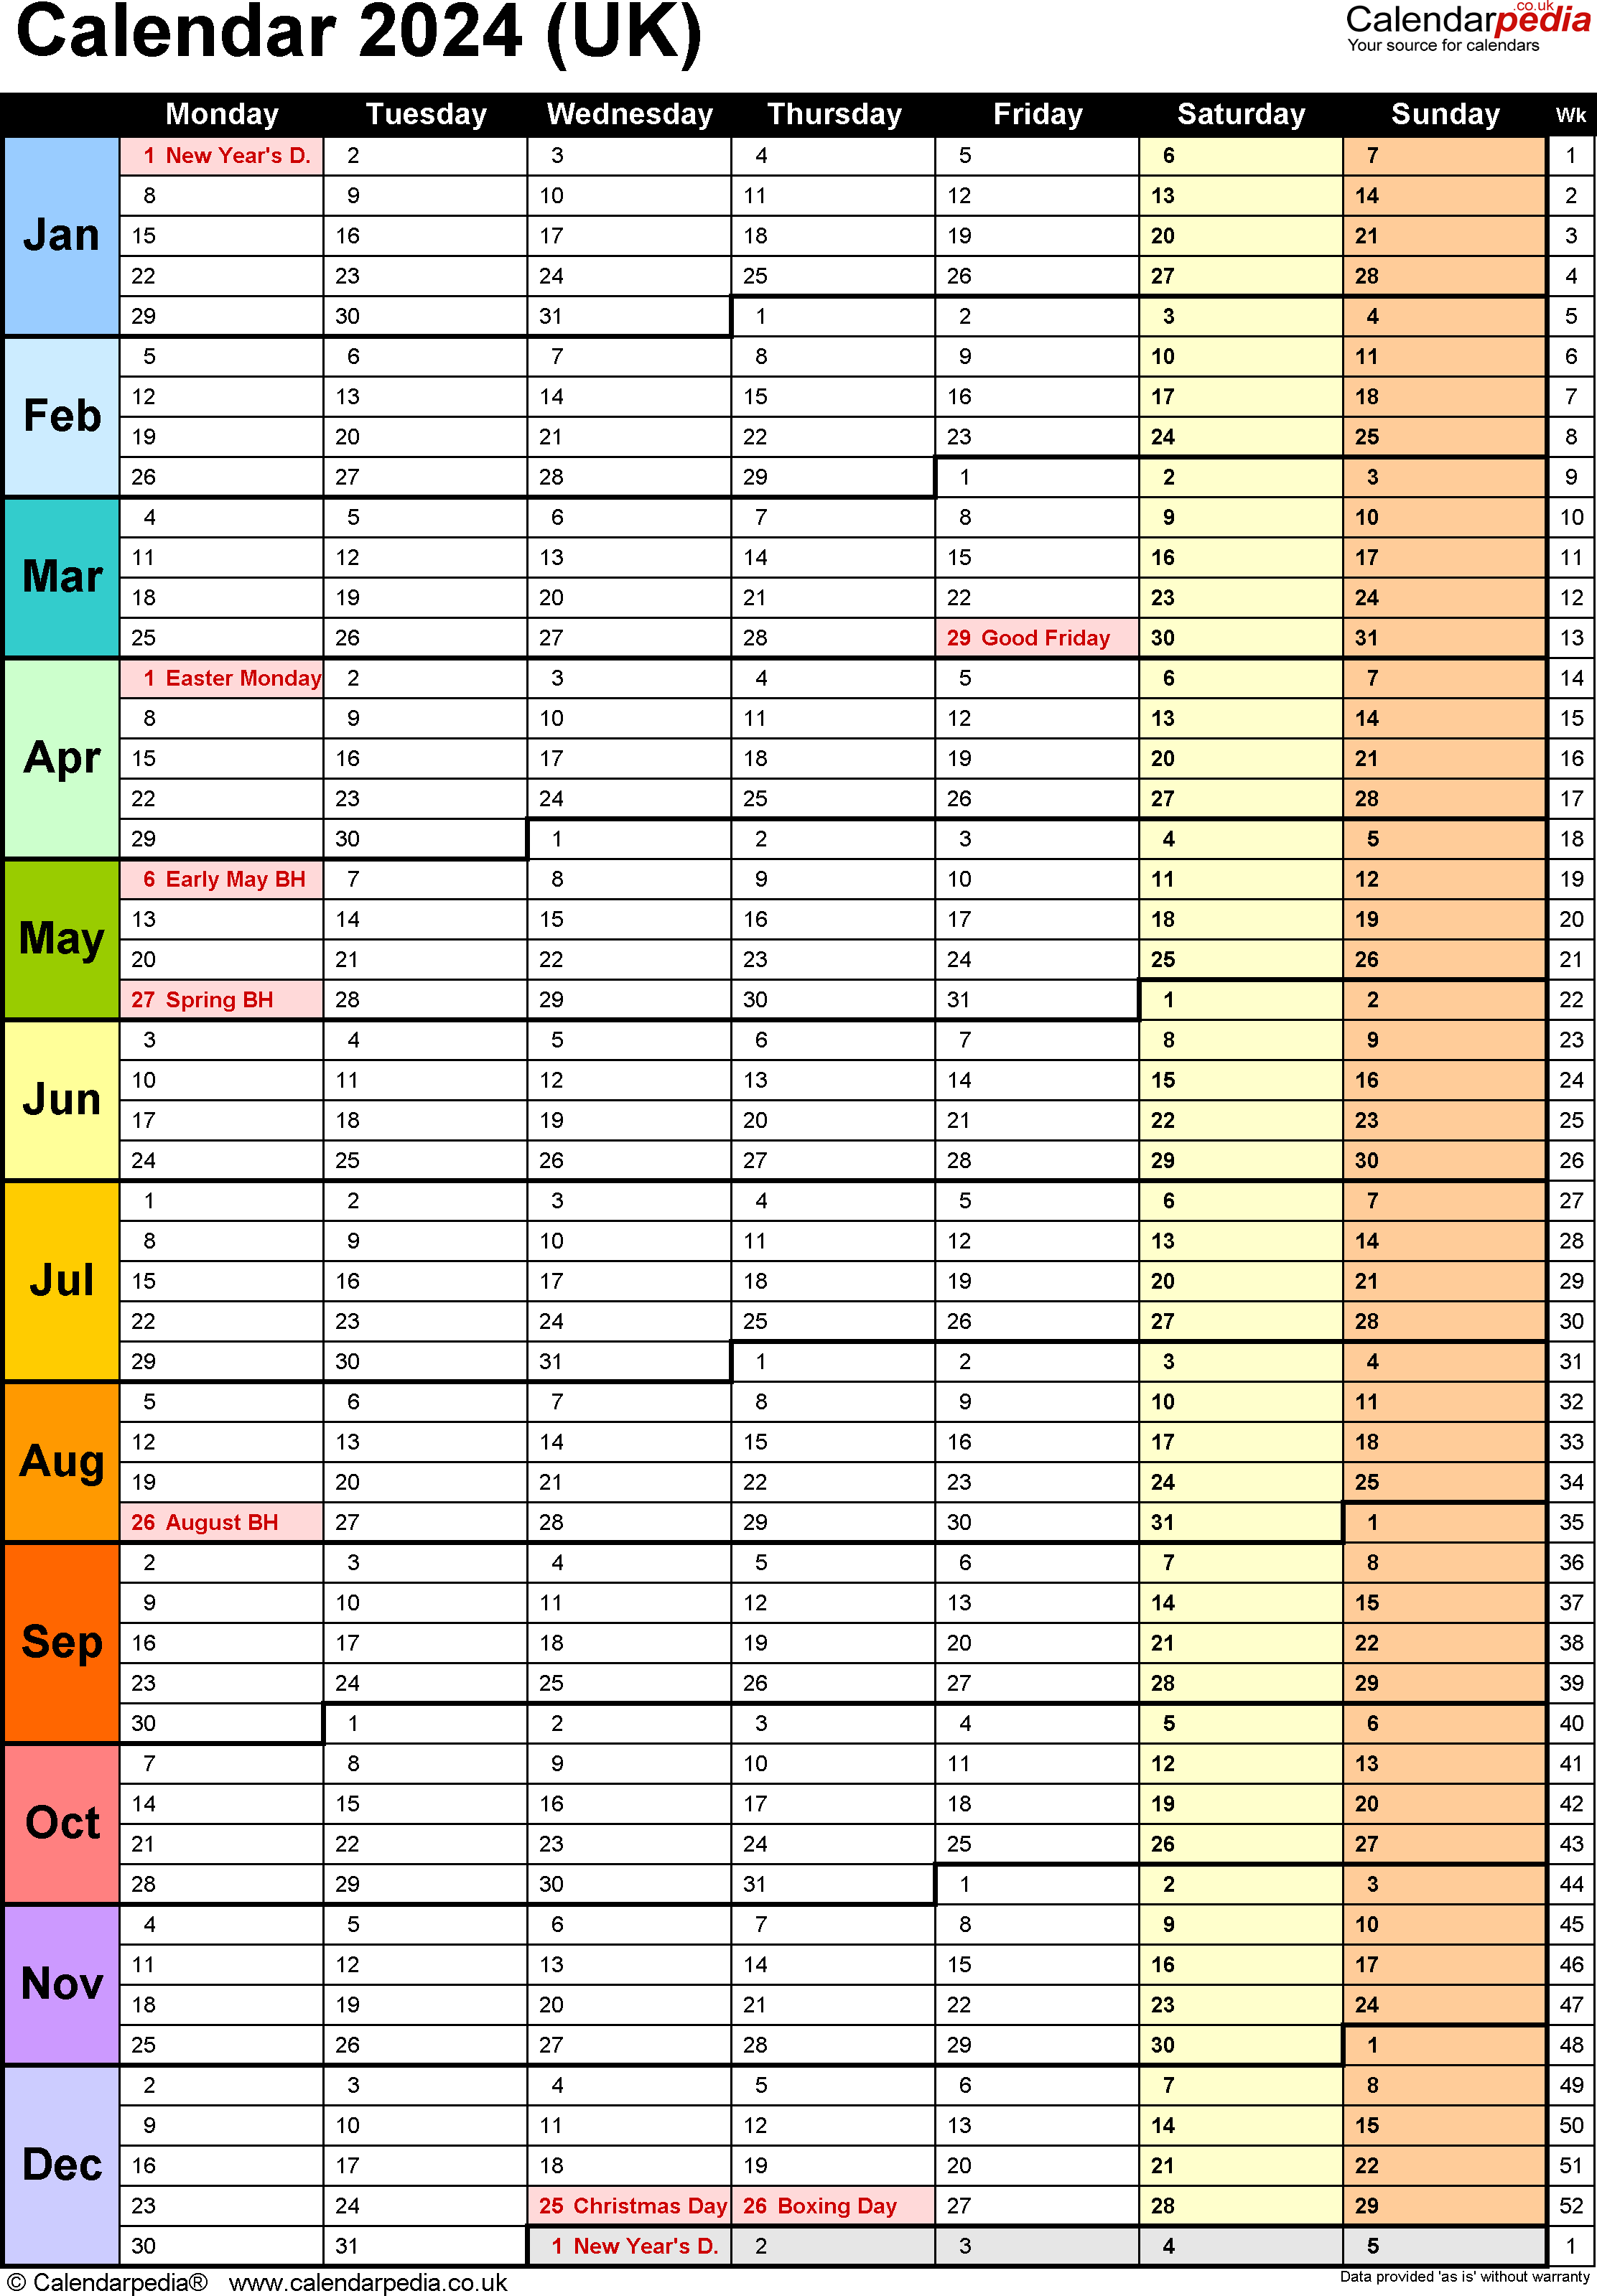 Calendar 2024 Uk Free Printable Microsoft Excel Templates Calendar - Free Printable 2024 Calendar UK